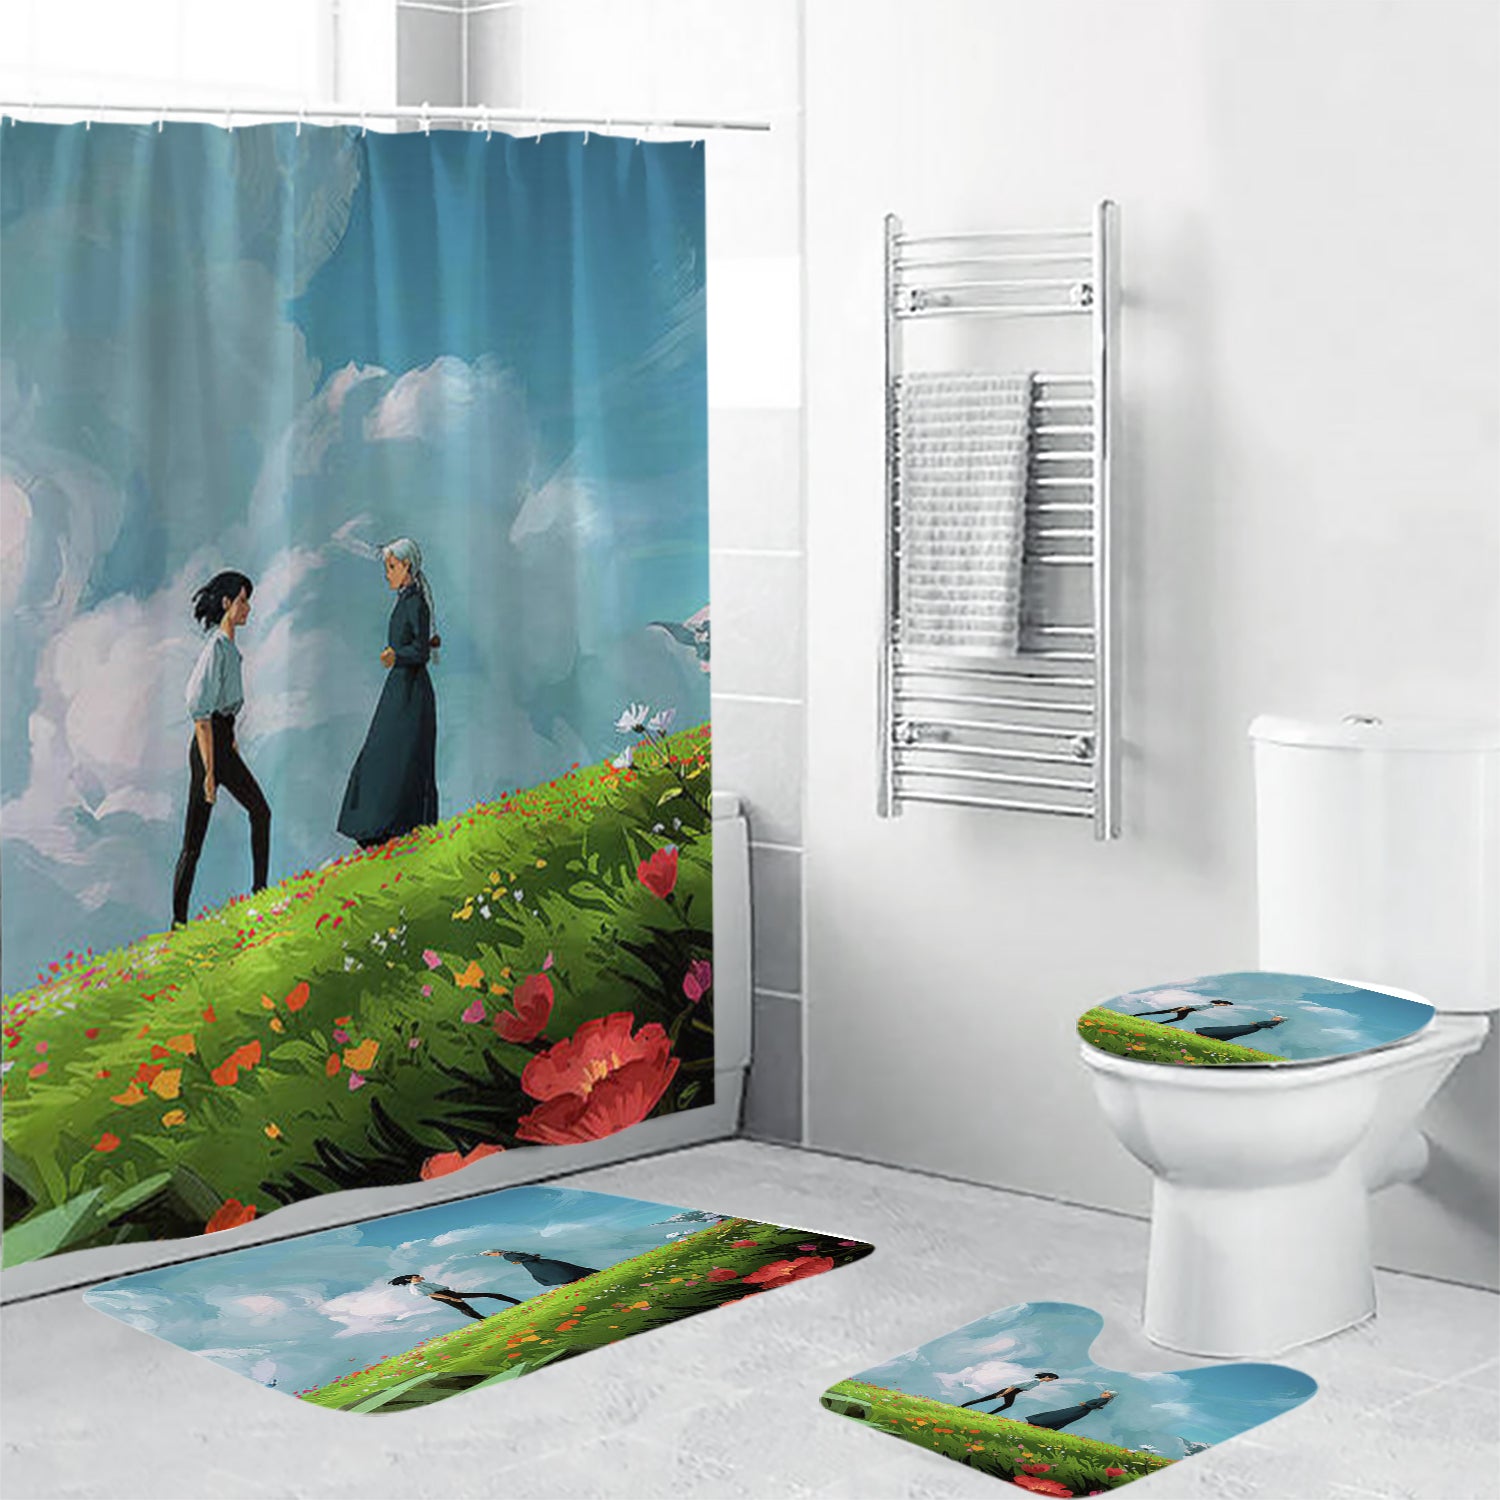 Howl's Moving Castle Poster 8 4PCS Shower Curtain Non-Slip Toilet Lid Cover Bath Mat - Bathroom Set Fans Gifts